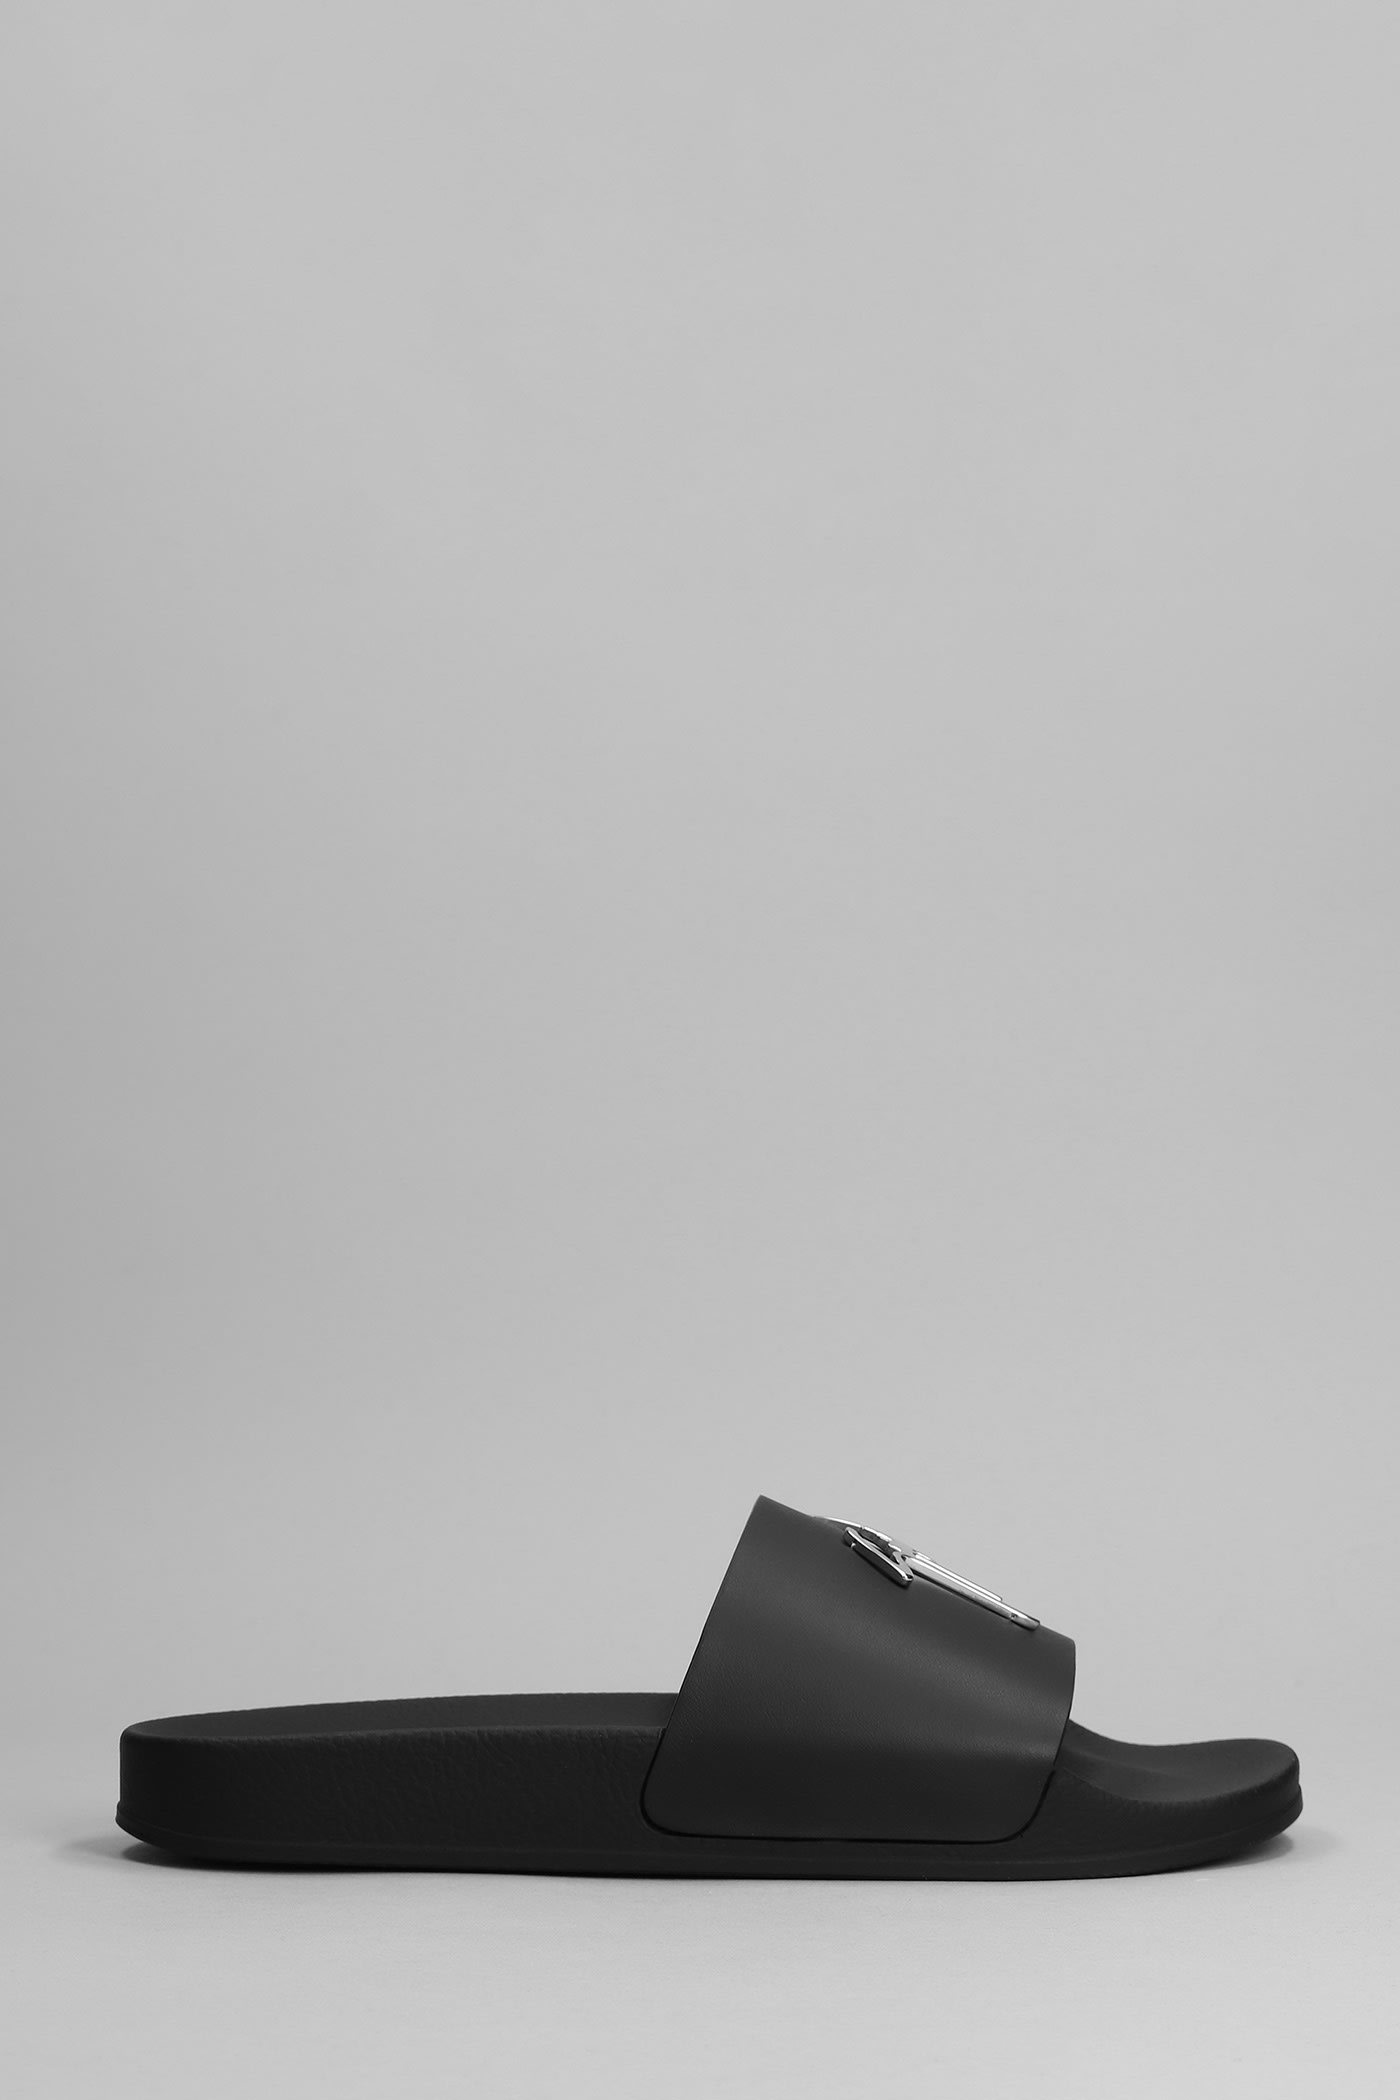 Giuseppe Zanotti Brett Flats In Black Leather